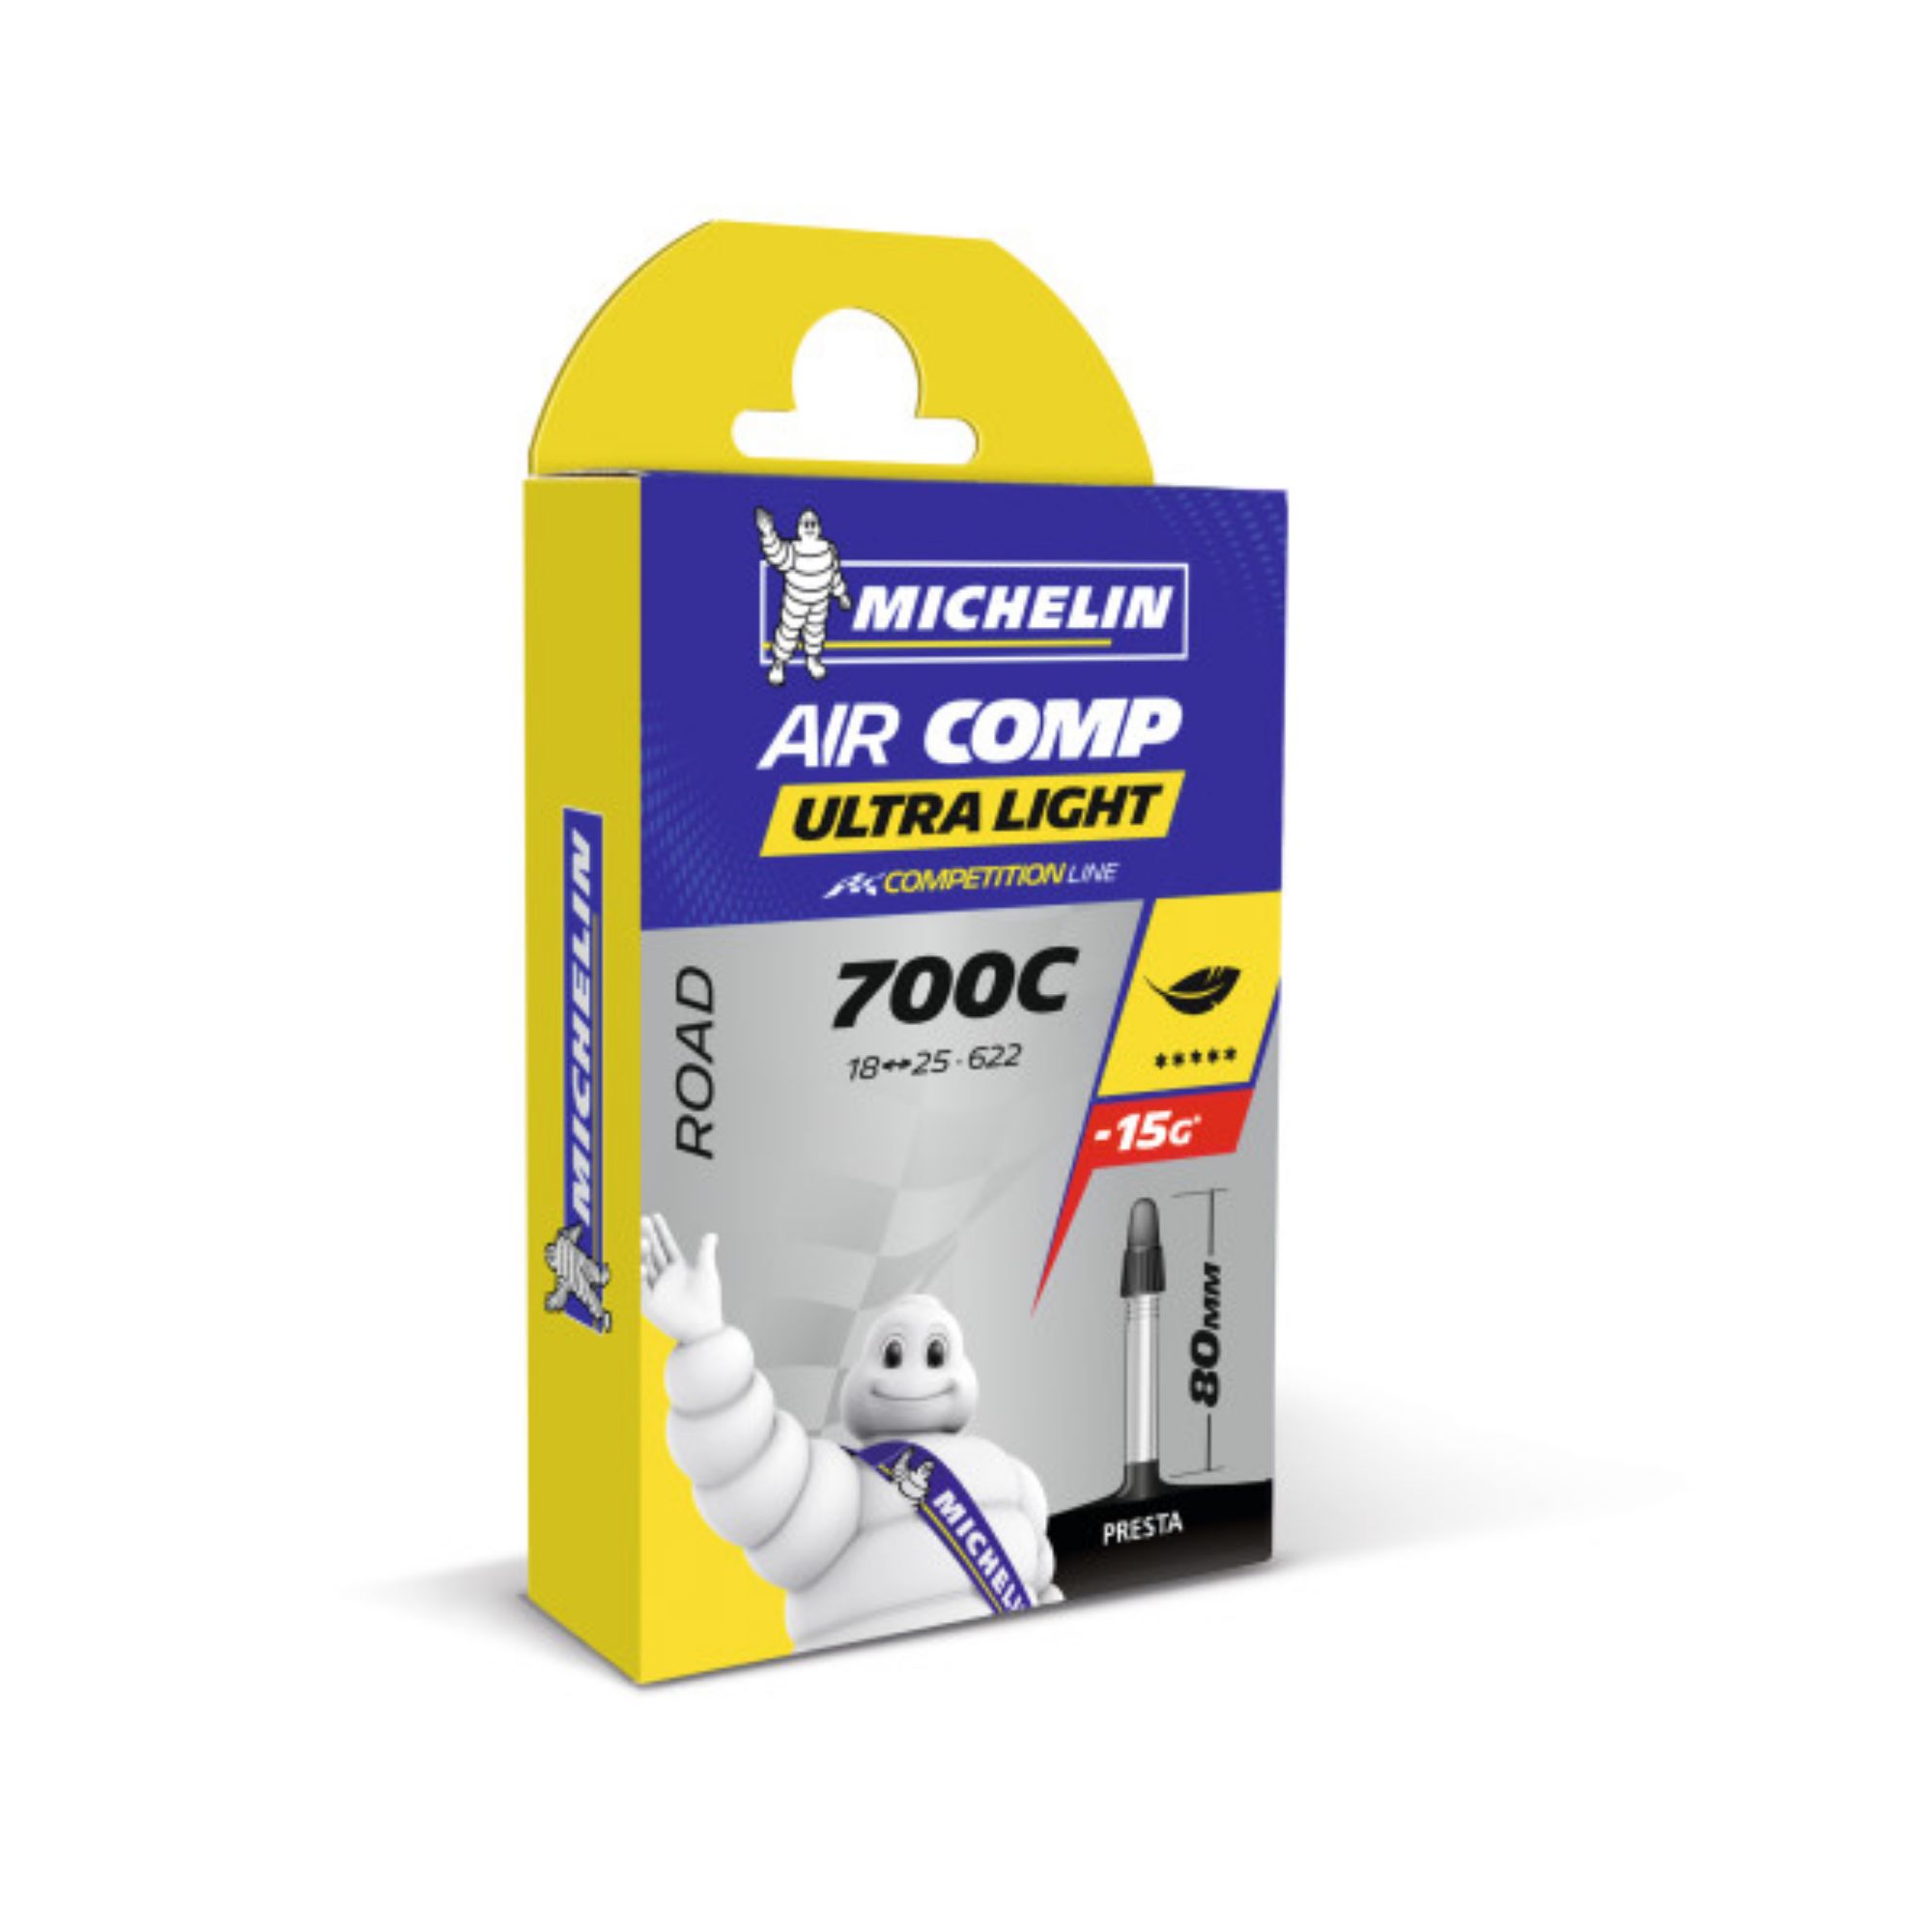 Michelin Aircomp Ultralight Road 700x18-25c 80 mm 700c Presta Valve Bike Inner Tube